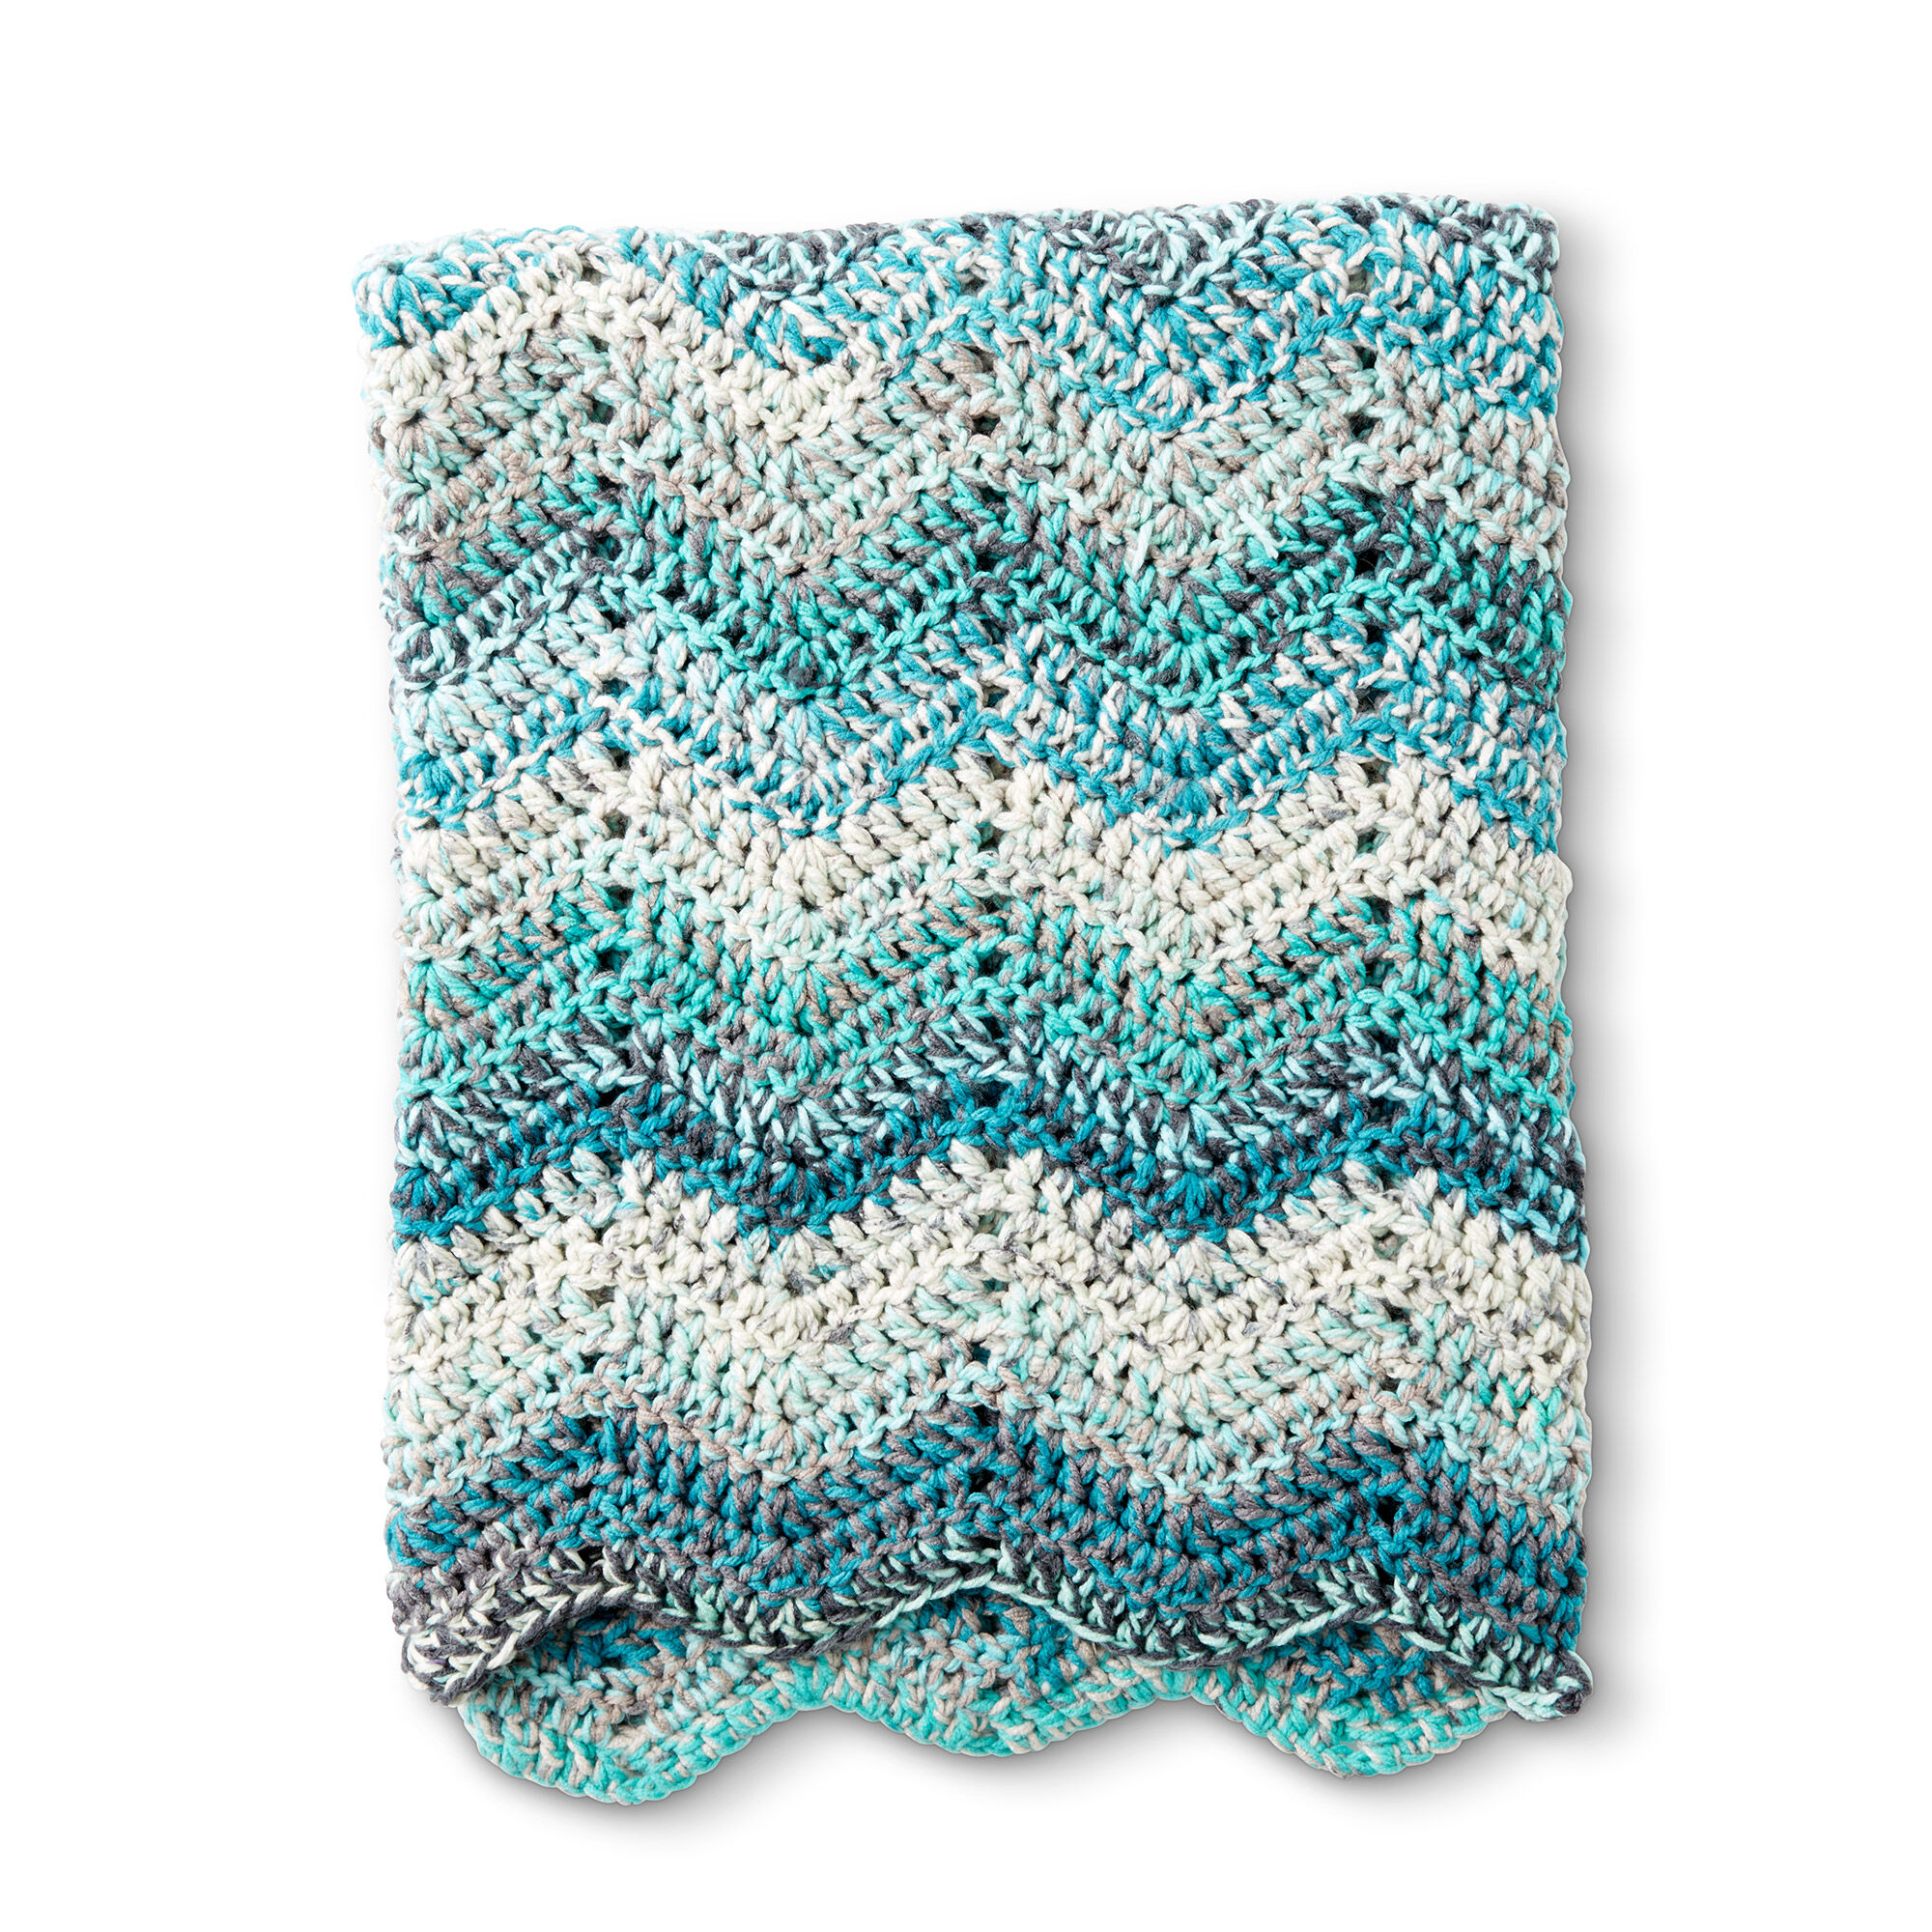 Chunky Cakes Yarn by Caron - Multicolor Yarn for Knitting, Crochet,  Weaving, Arts & Crafts - Ballet Sorbet, Bulk 12 Pack